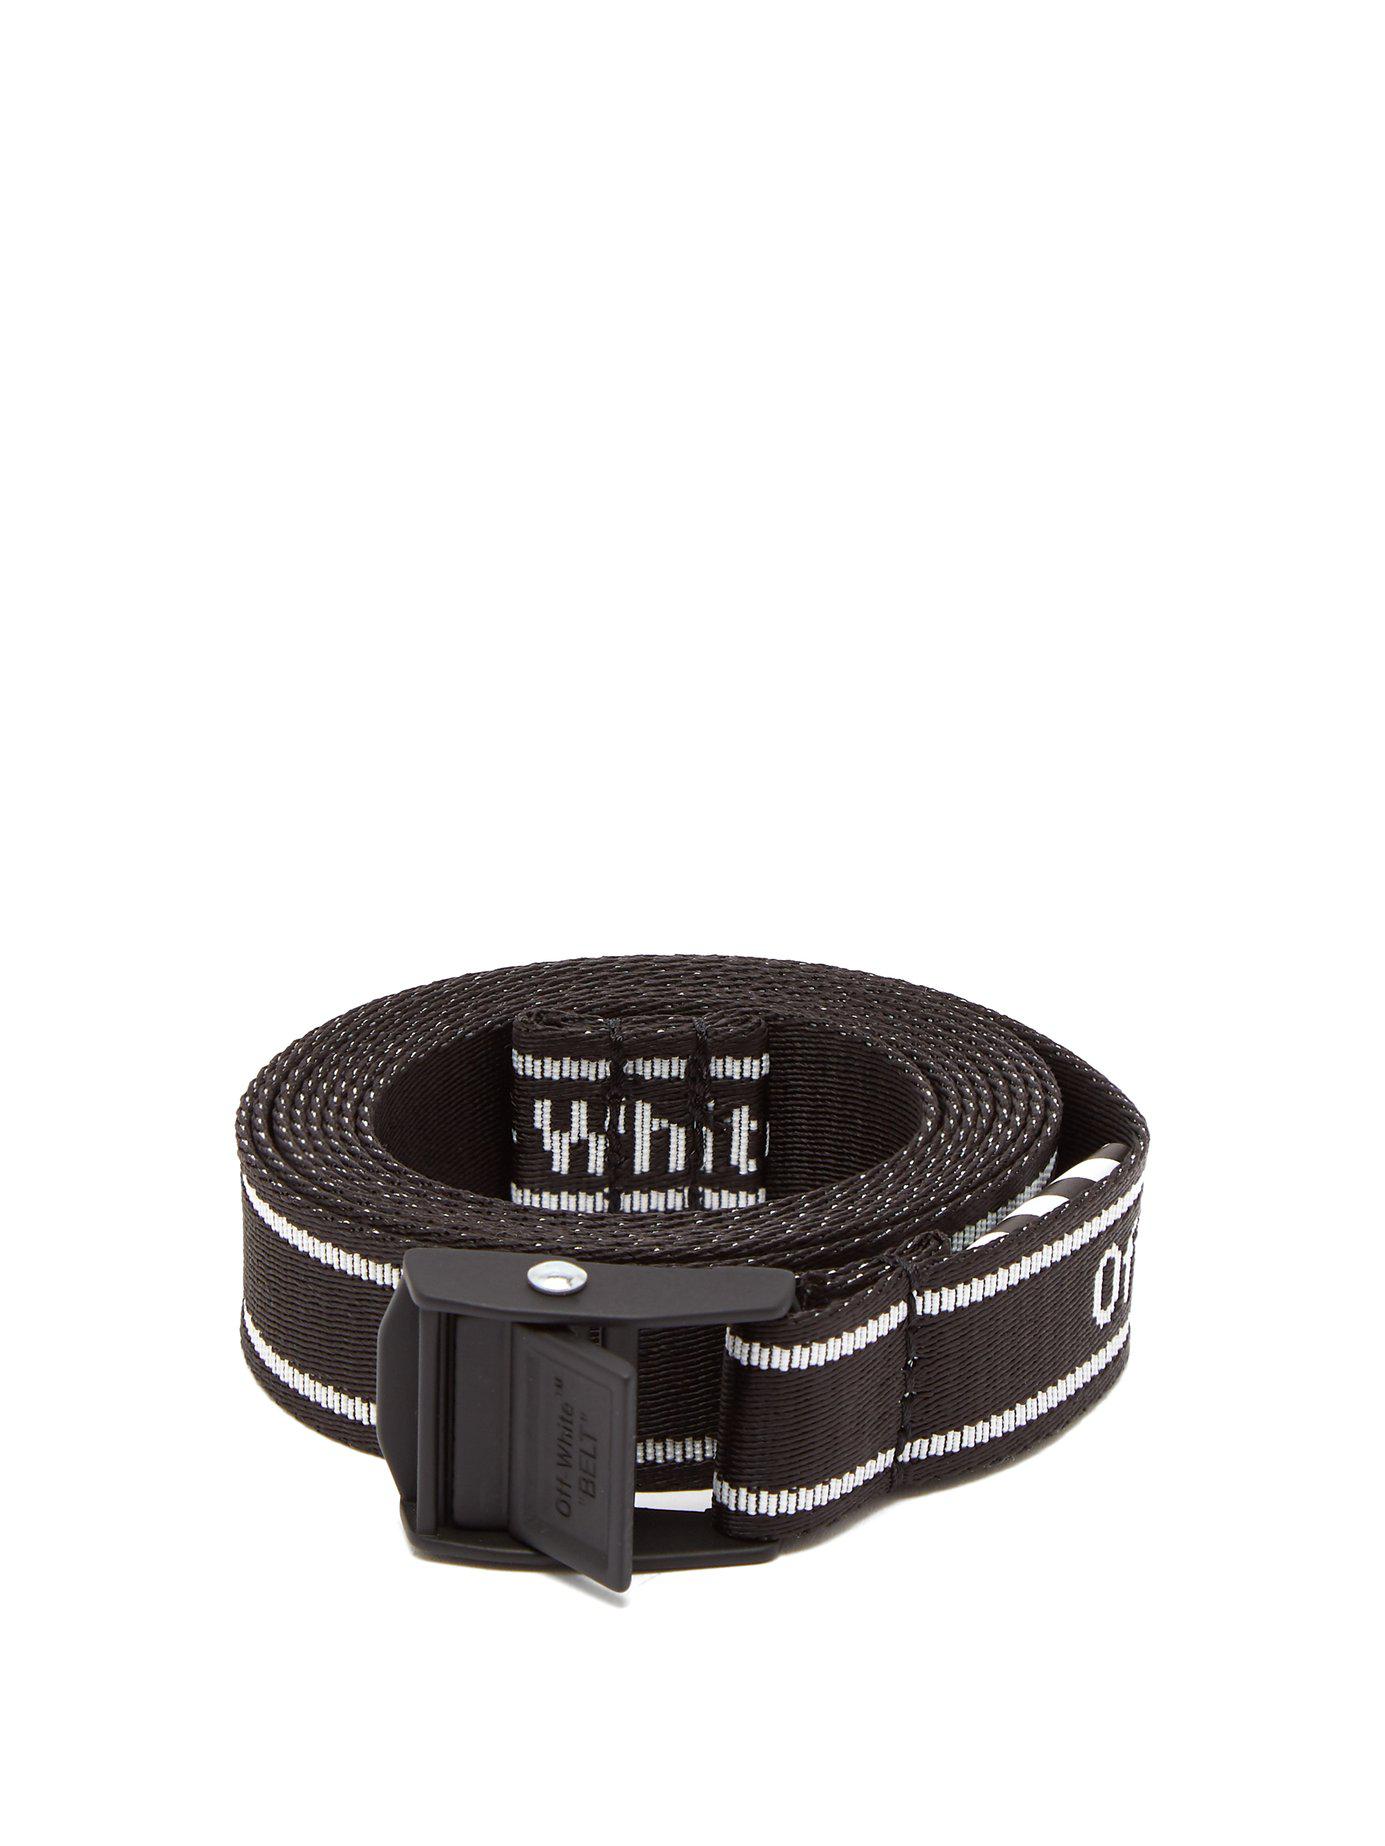 Off-White c/o Virgil Abloh Monochrome Industrial Canvas Belt in Black ...